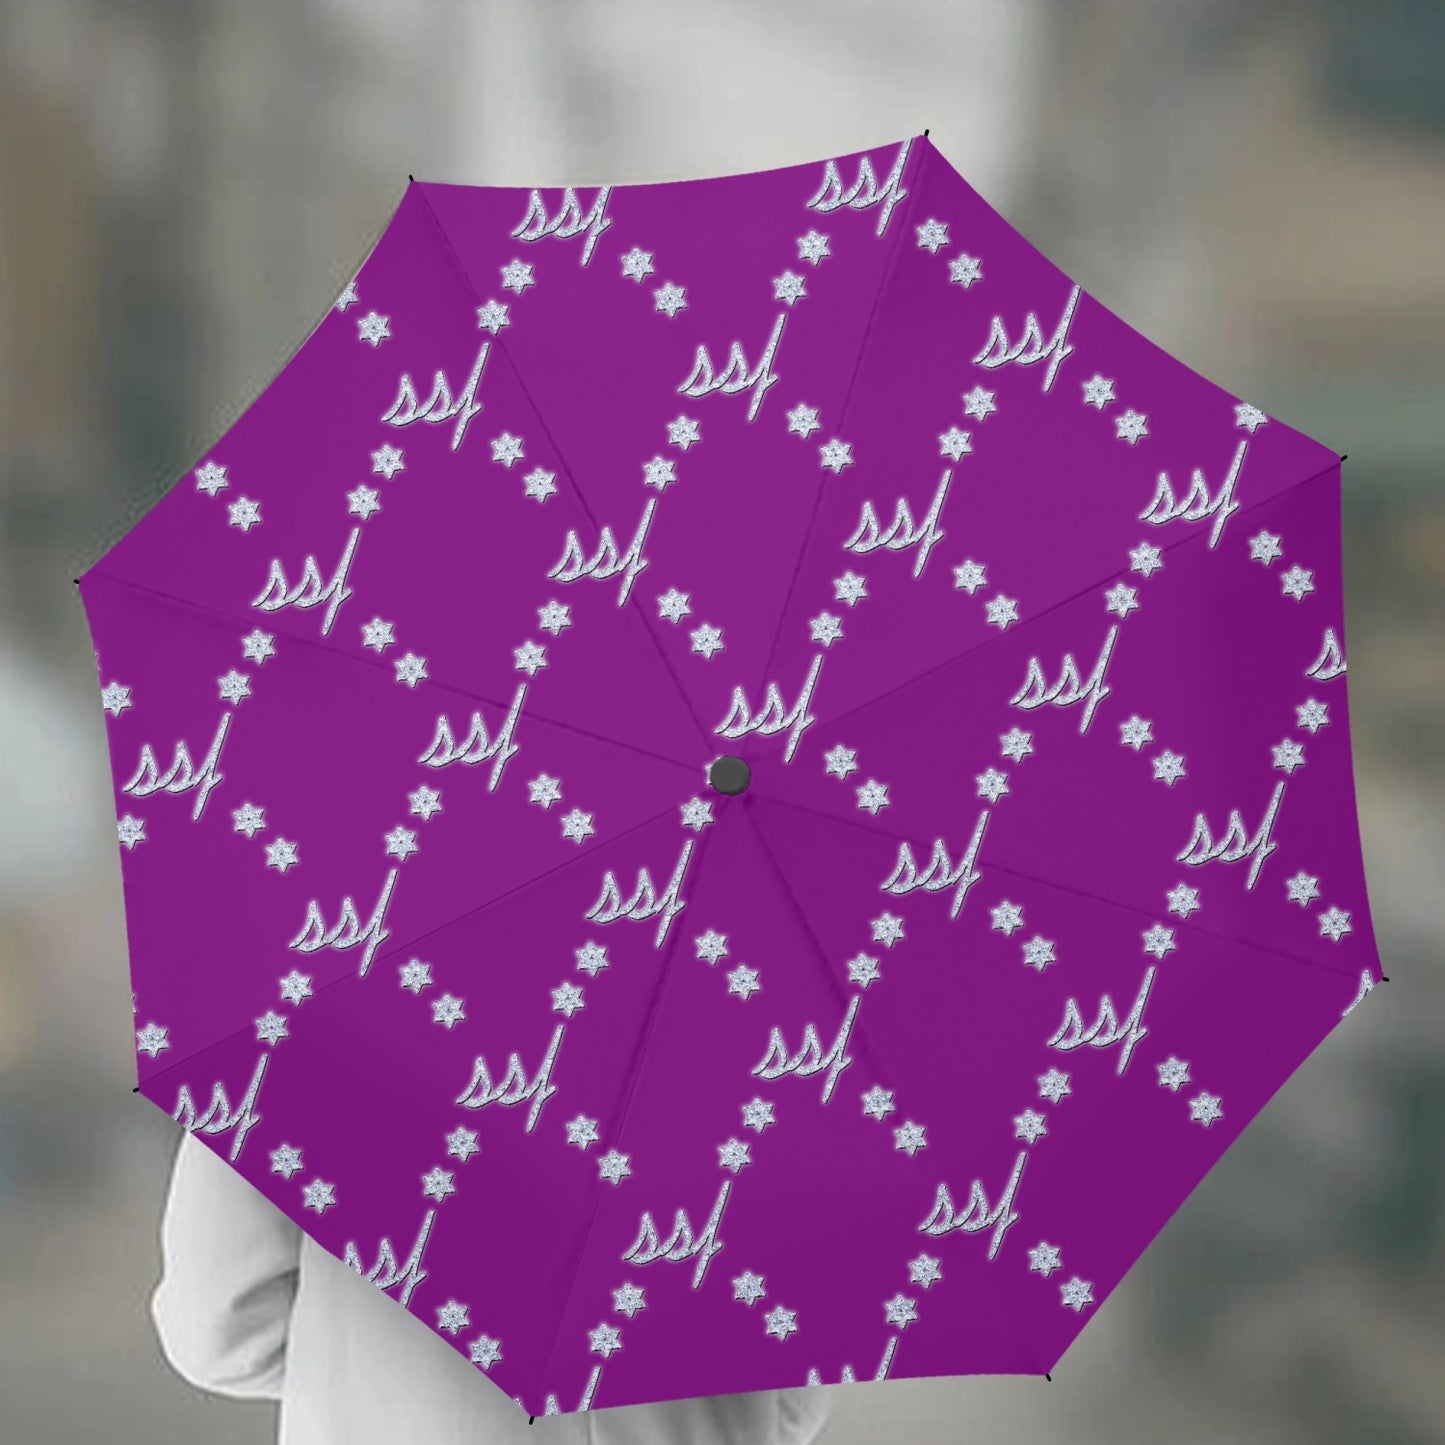 Bussdown Purple Umbrella